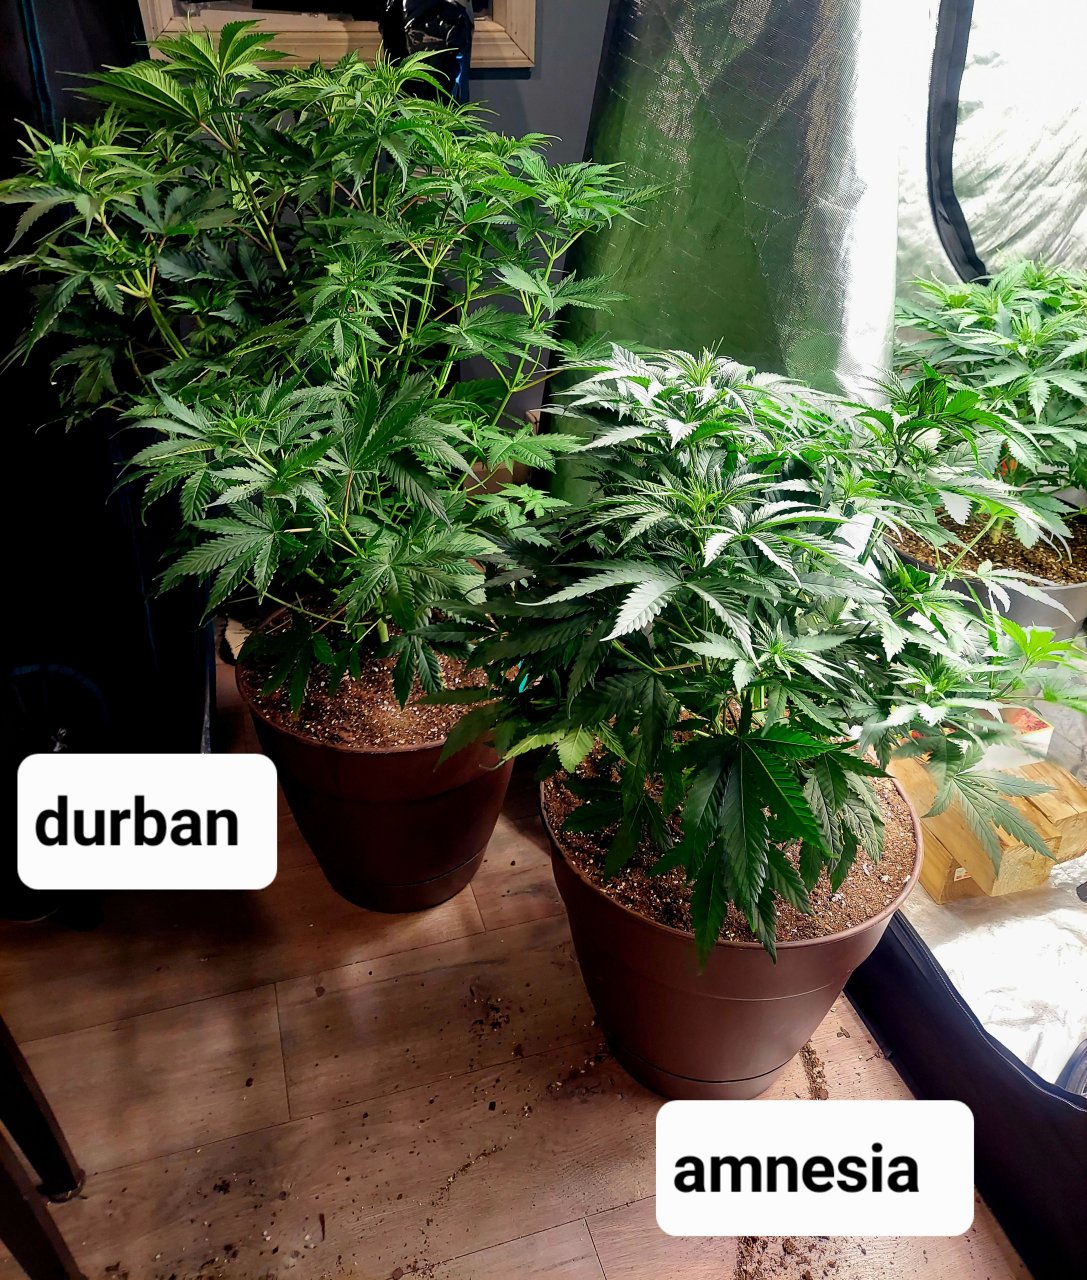 Amnesia-Durban Poison-FC4800 Summer Grow 2023-Grow Journal